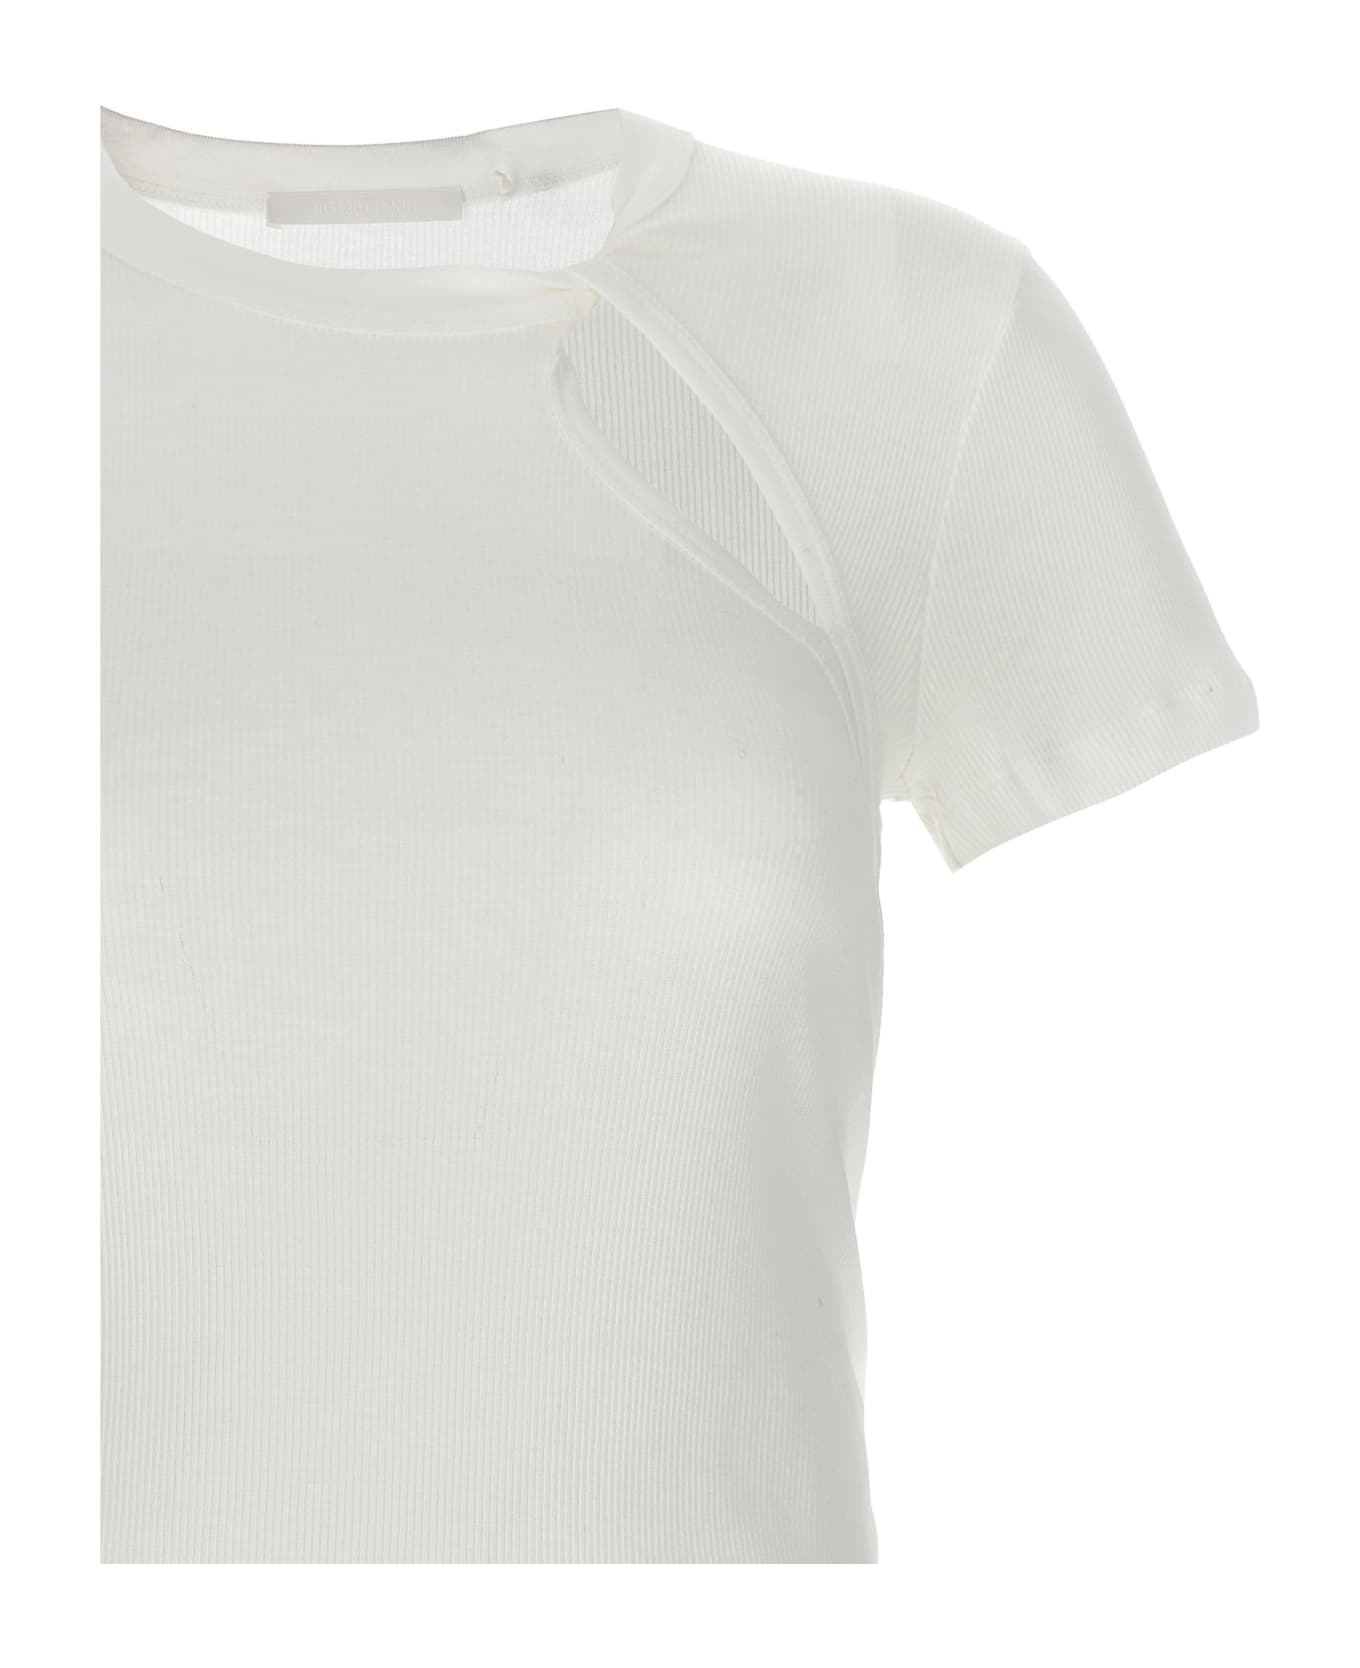 Helmut Lang Cut-out T-shirt - White